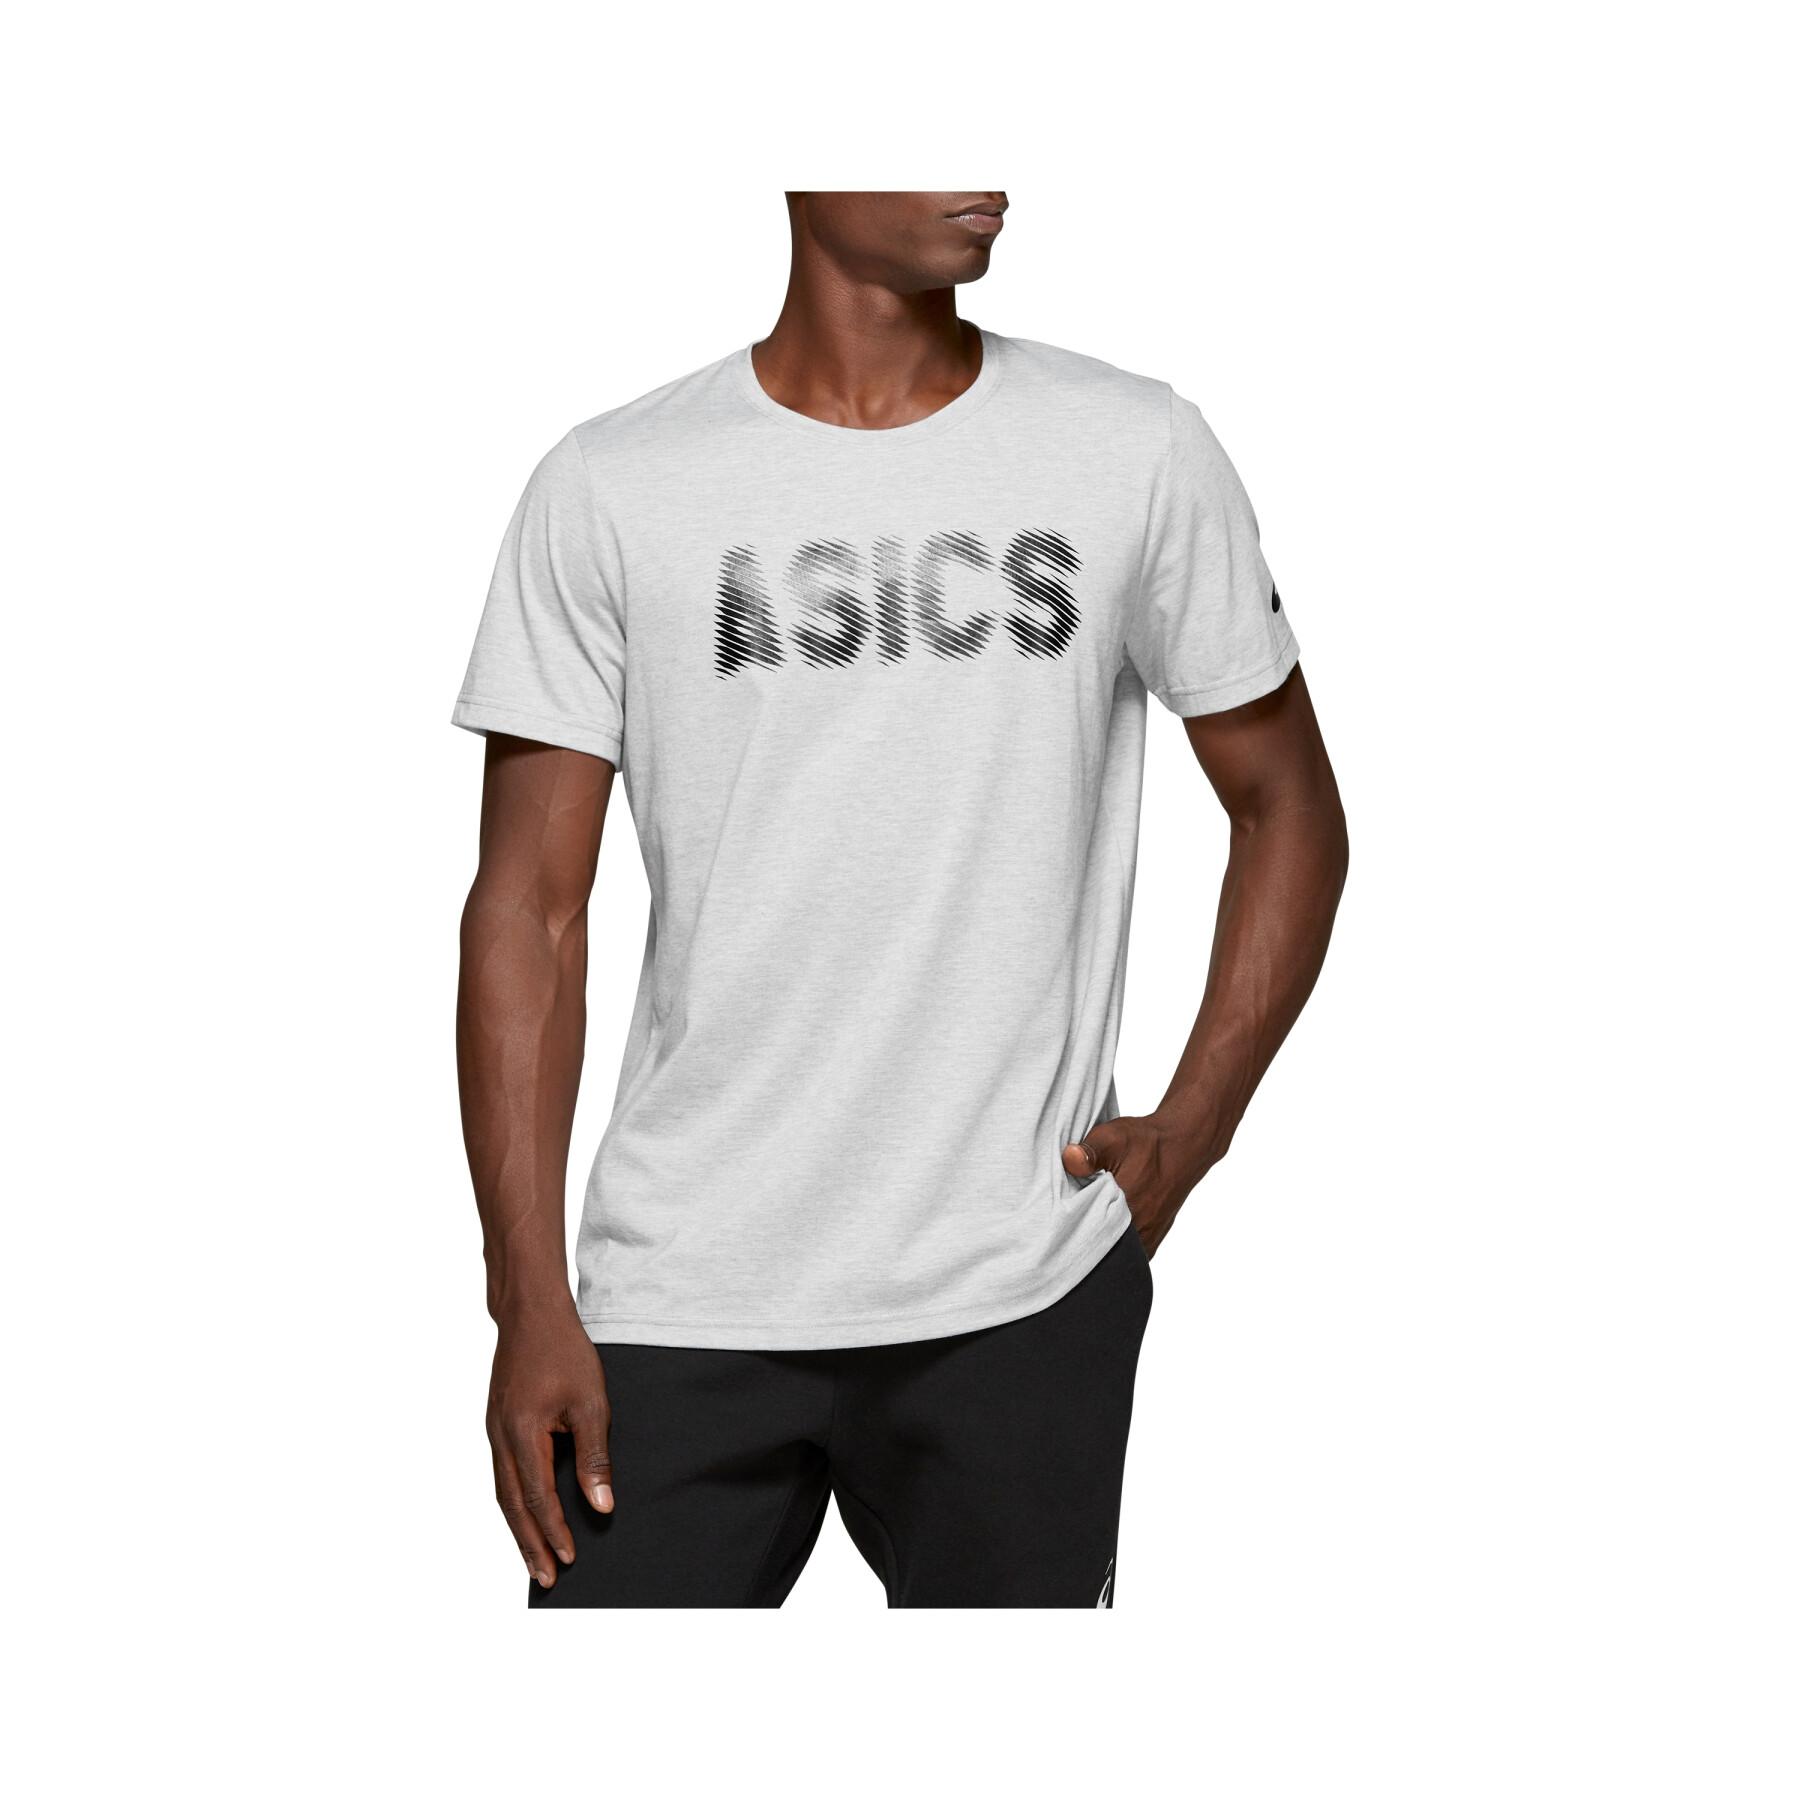 T-shirt Asics Gpx T 2